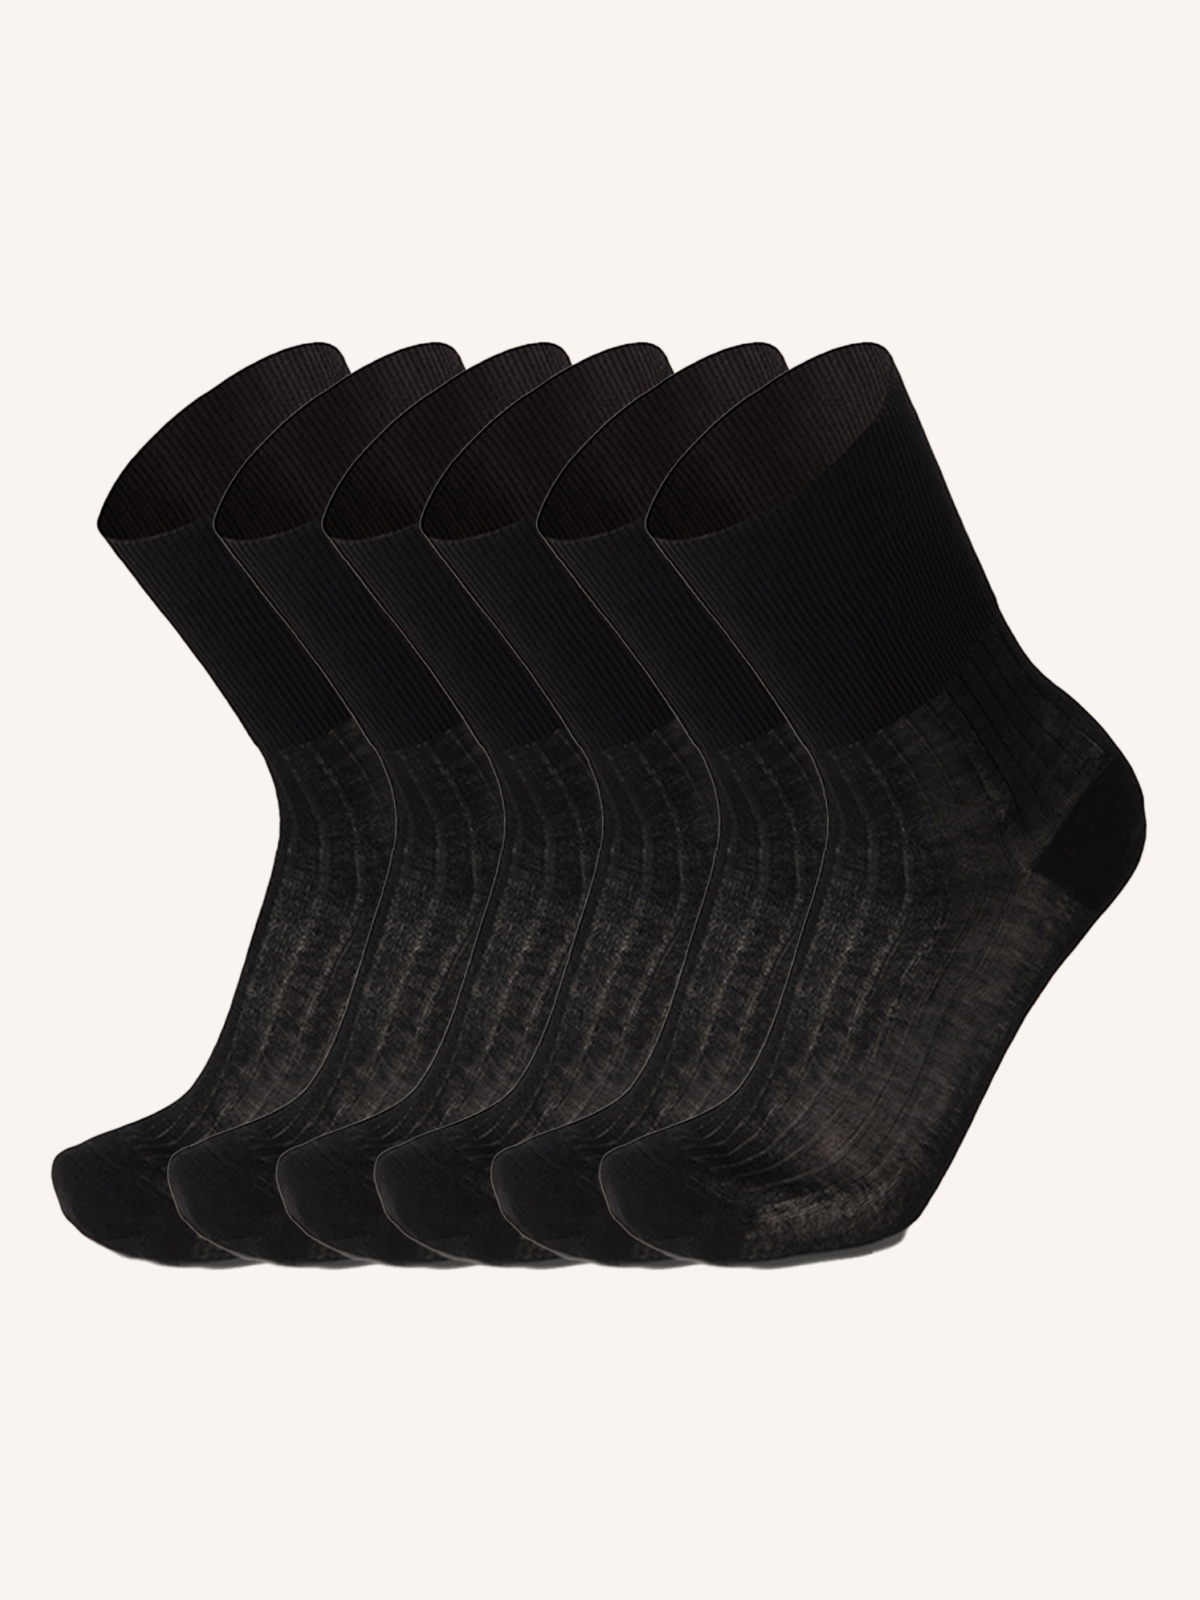 Long Sanitary Cotton Socks for Men | Pack of 6 Pairs | Sanital LC